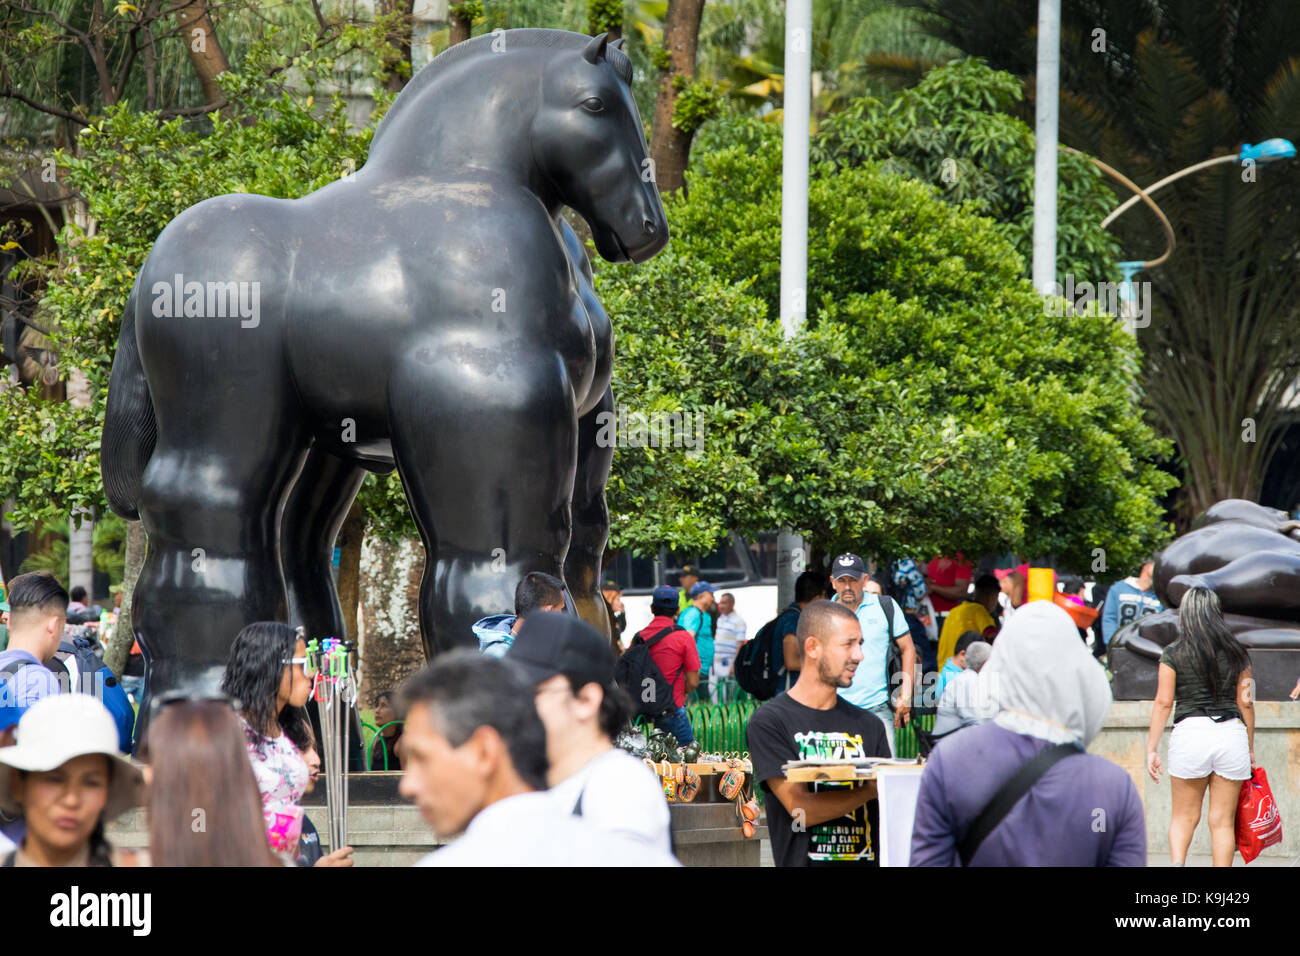 Horse or caballo sculpture, Botero Plaza, Medellin, Colombia Stock Photo